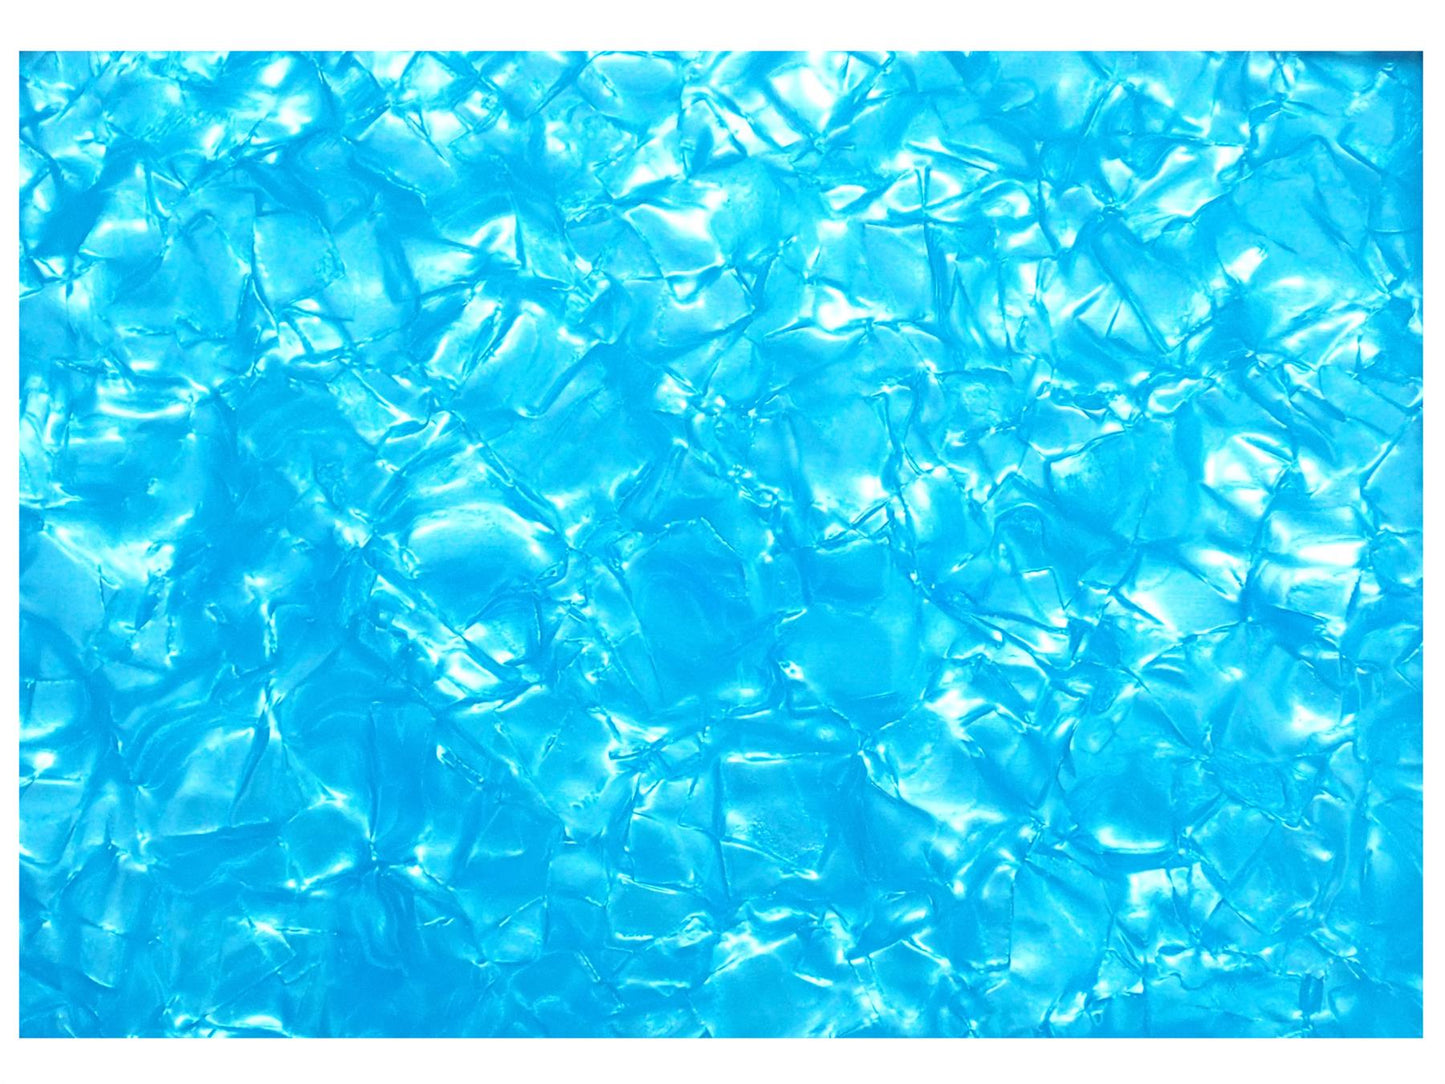 Incudo Light Blue Large Pearloid Celluloid Drum Wrap - 1600x700x0.5mm